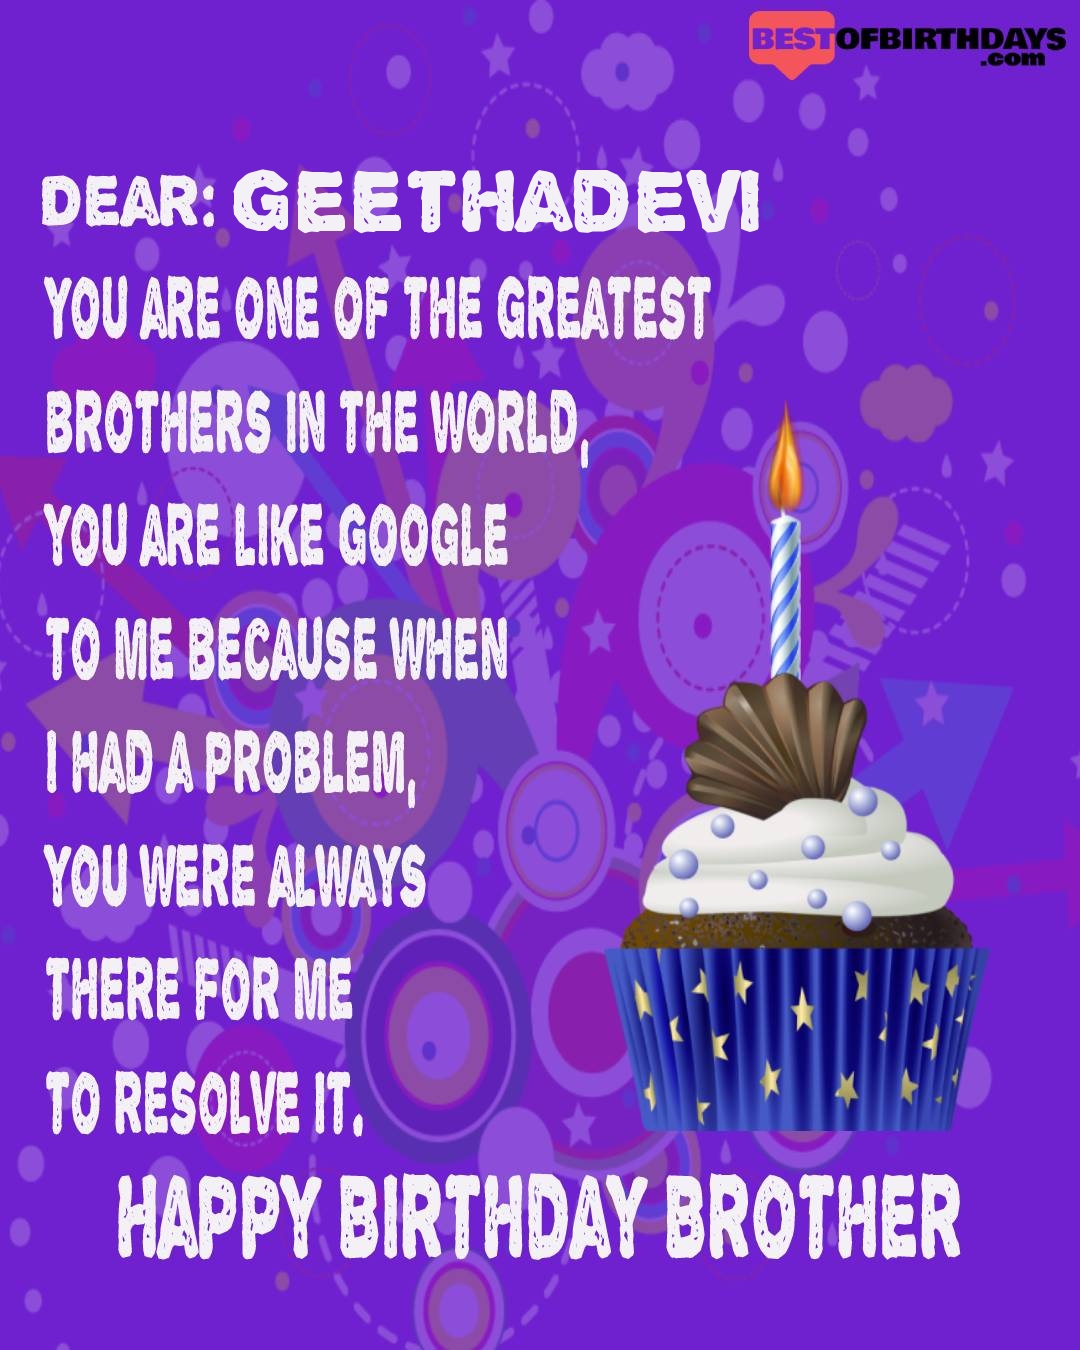 Happy birthday geethadevi bhai brother bro